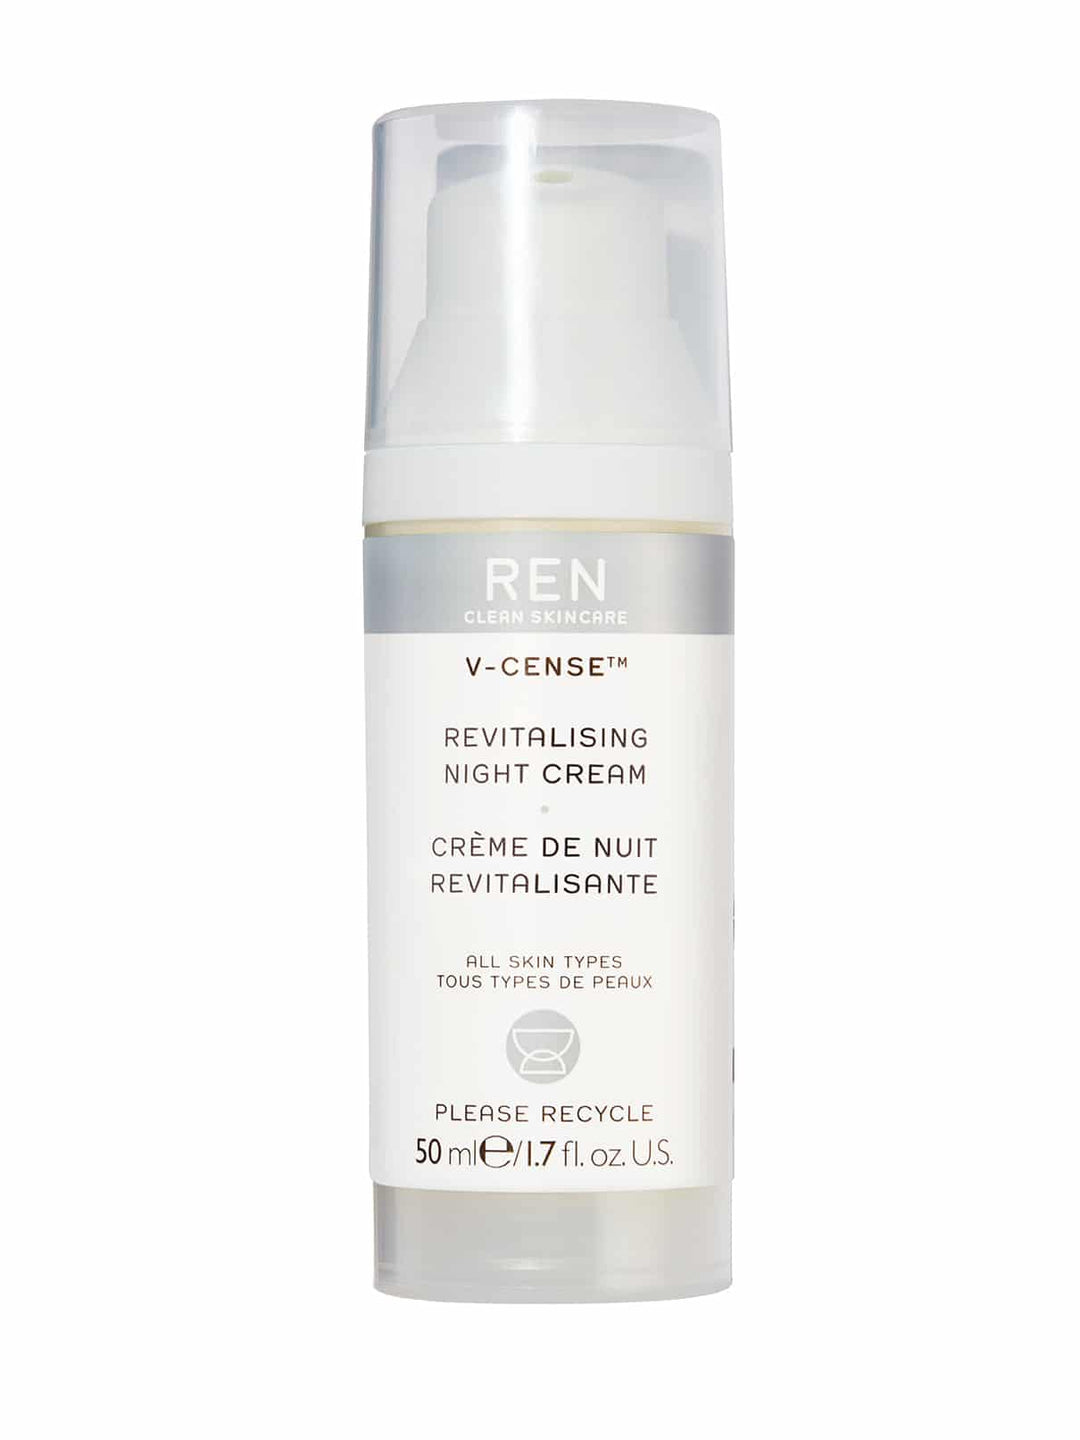 V-Cense Revitalising Night Cream - Ren - Huidproducten.nl